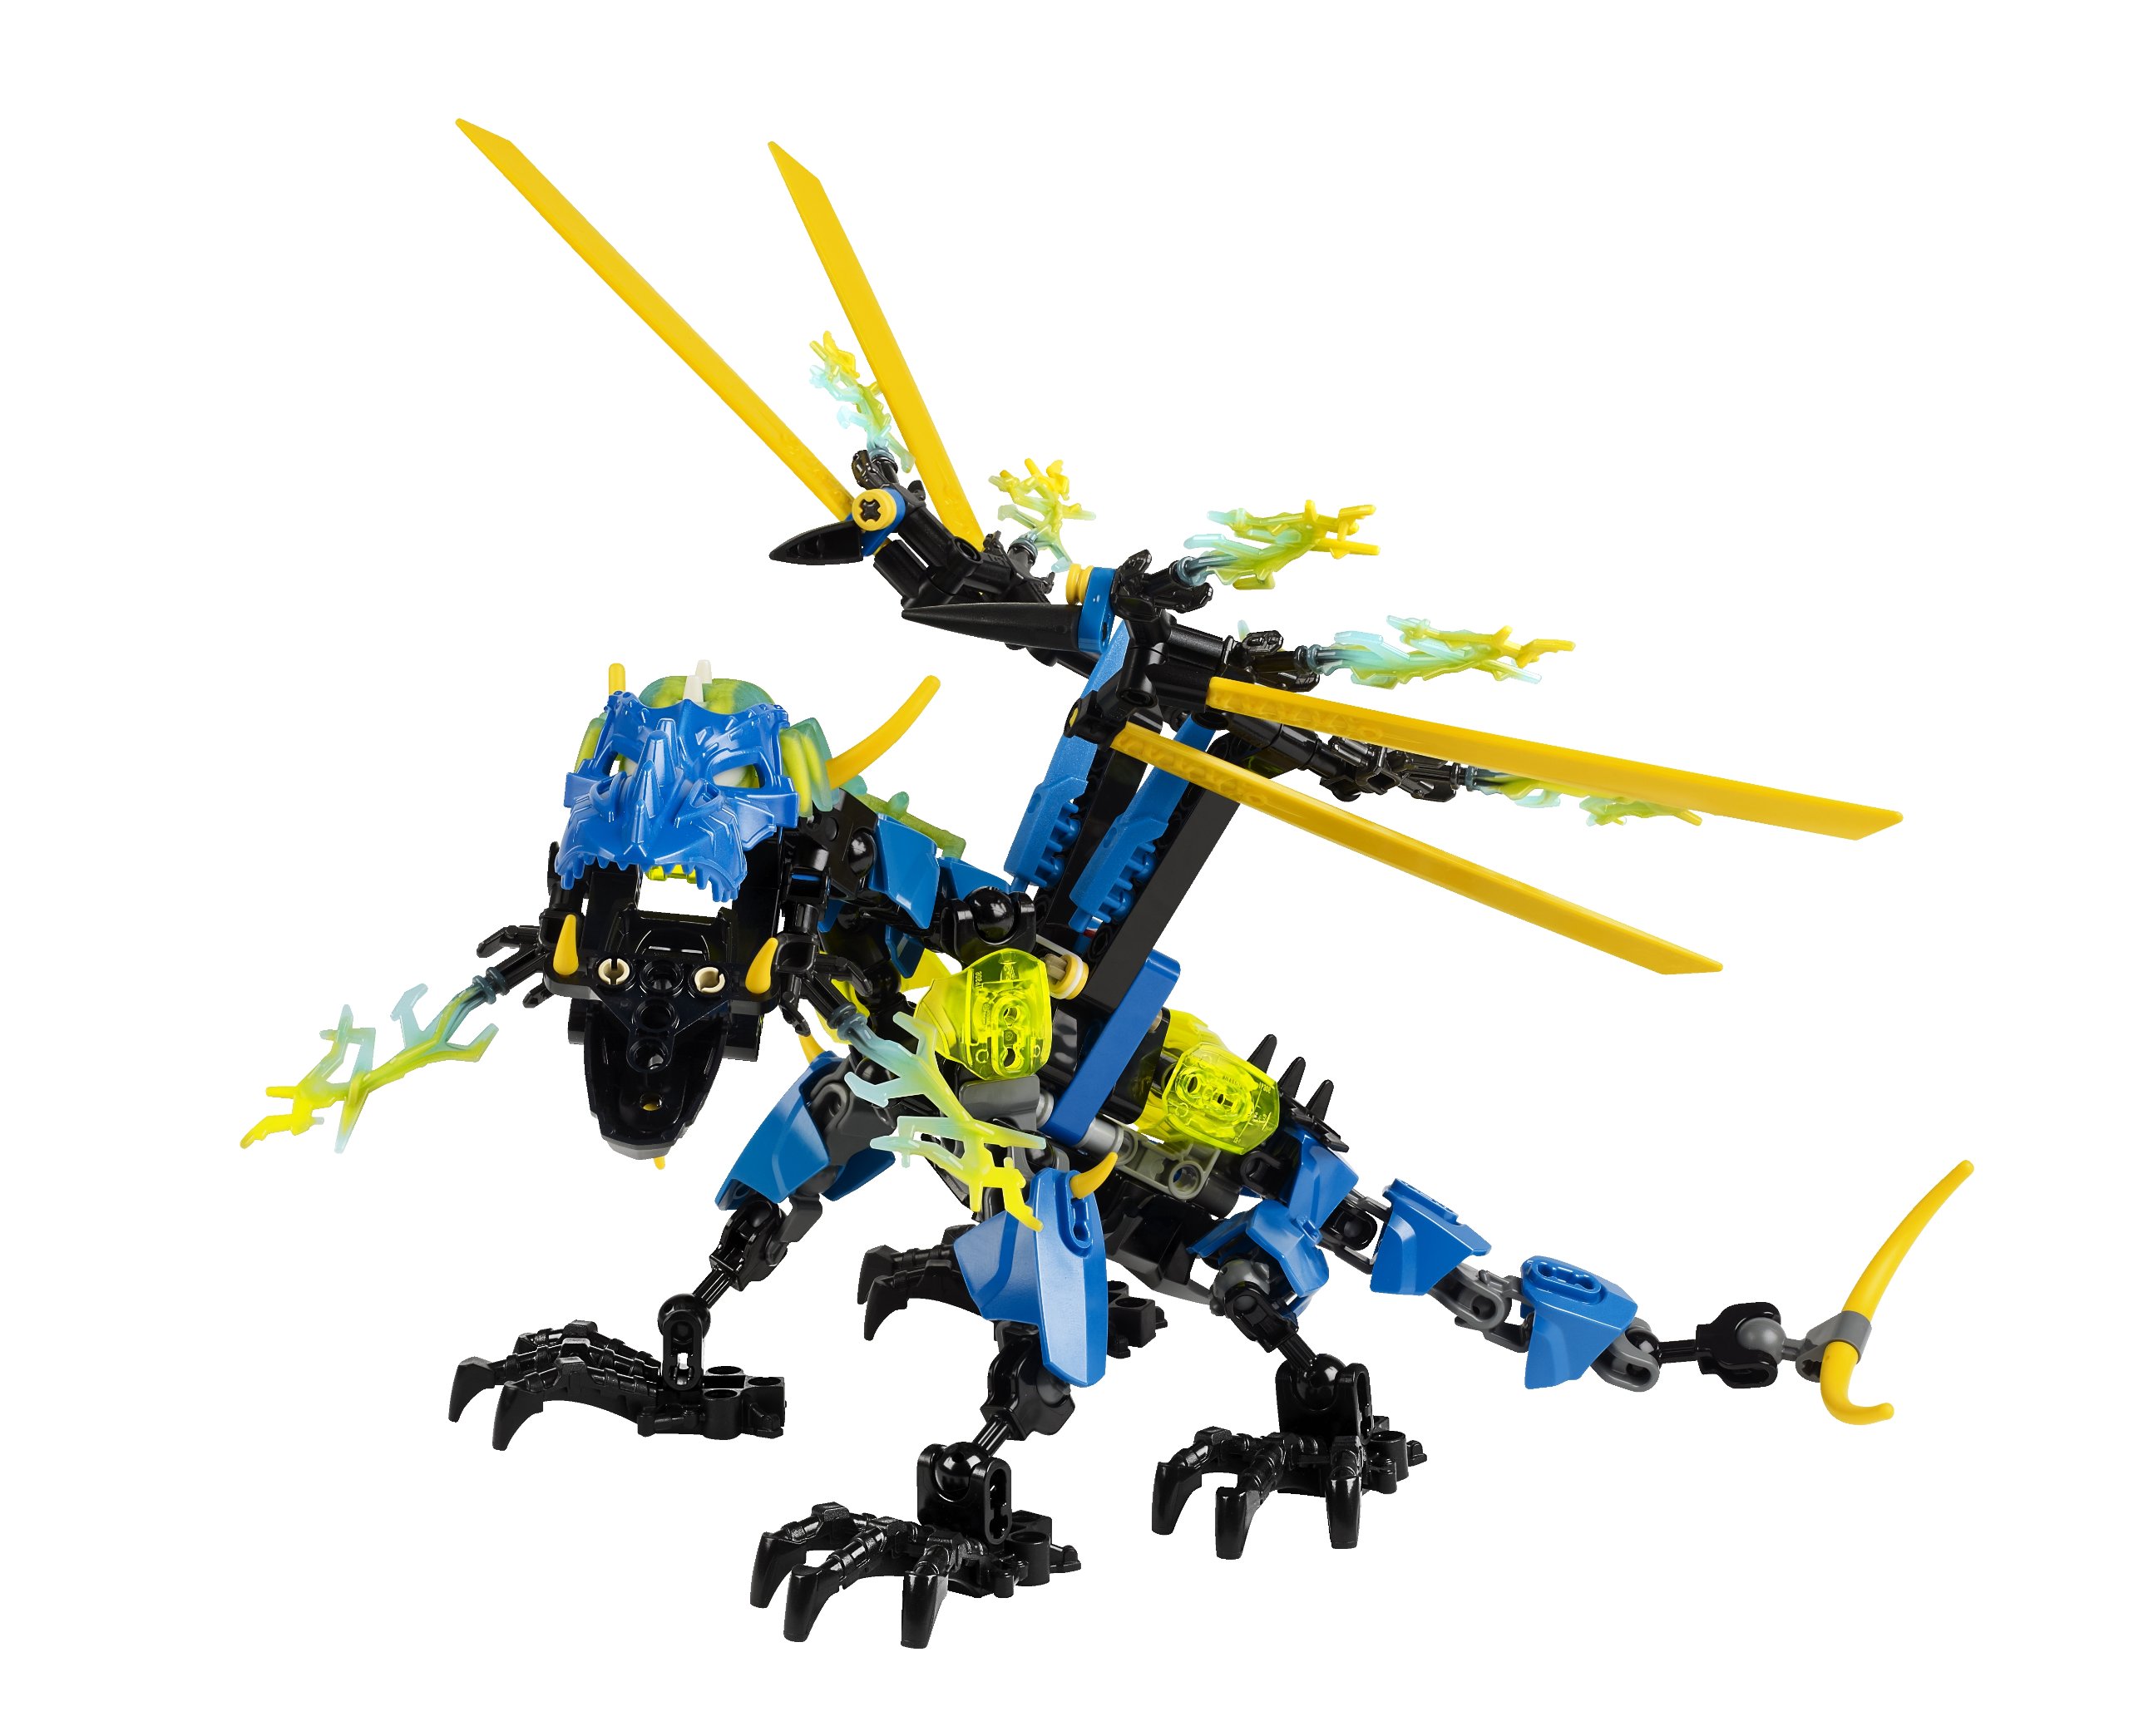 LEGO Hero Factory Dragon Bolt 149 pcs